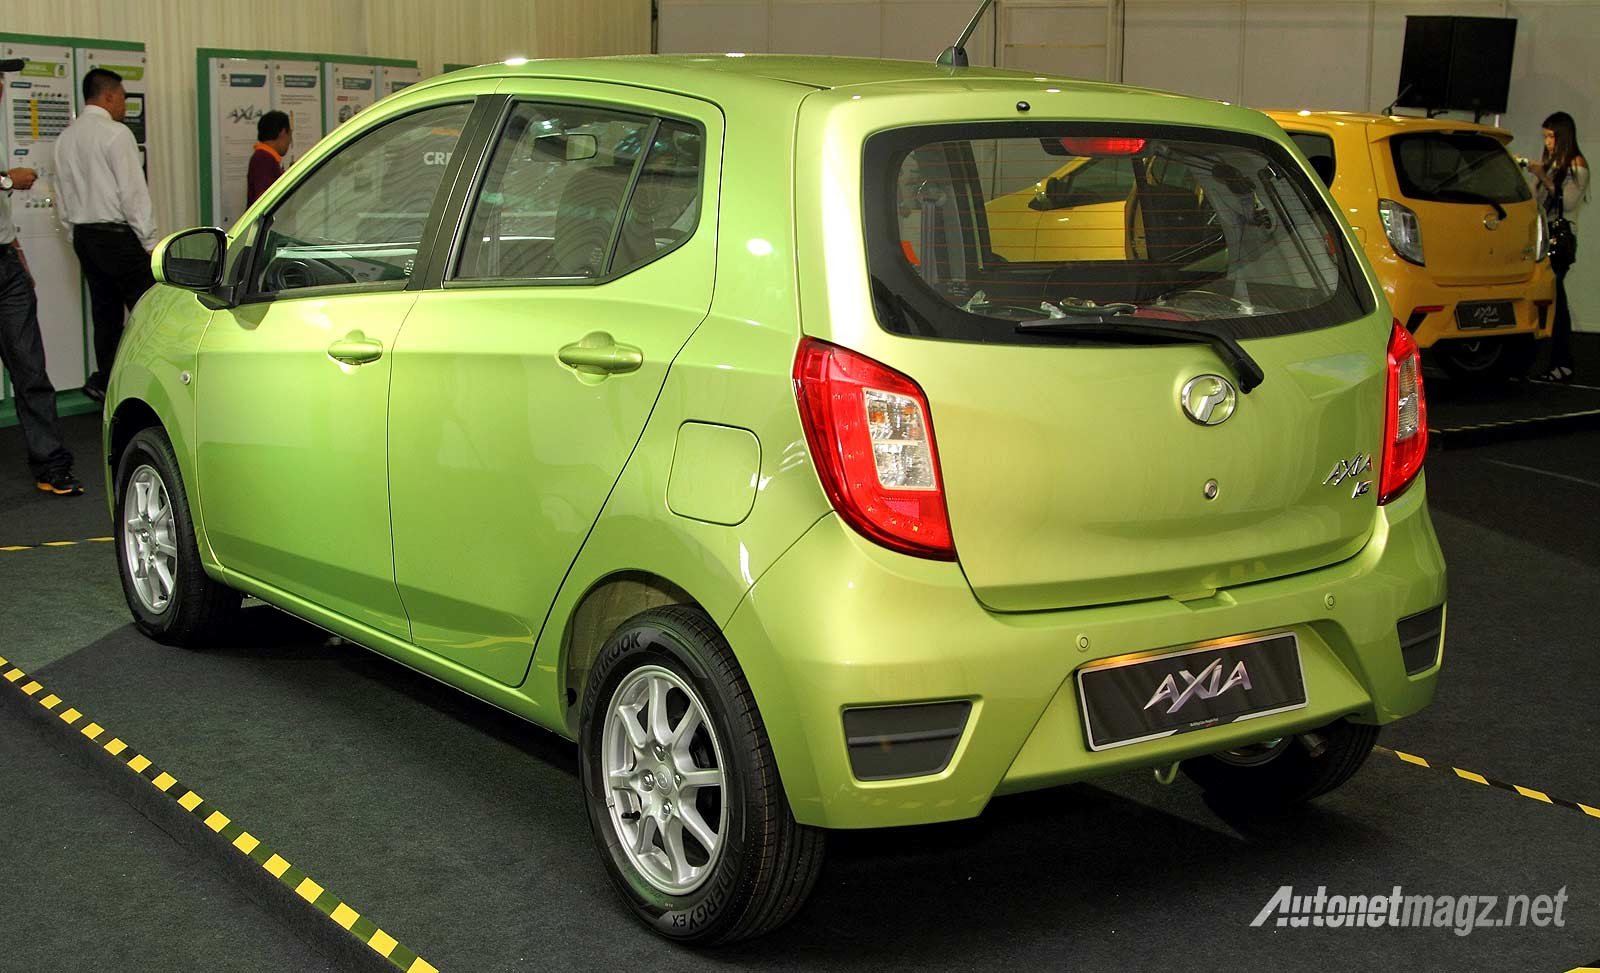 Gambar Modifikasi Mobil Agya Warna Kuning Sobat Modifikasi